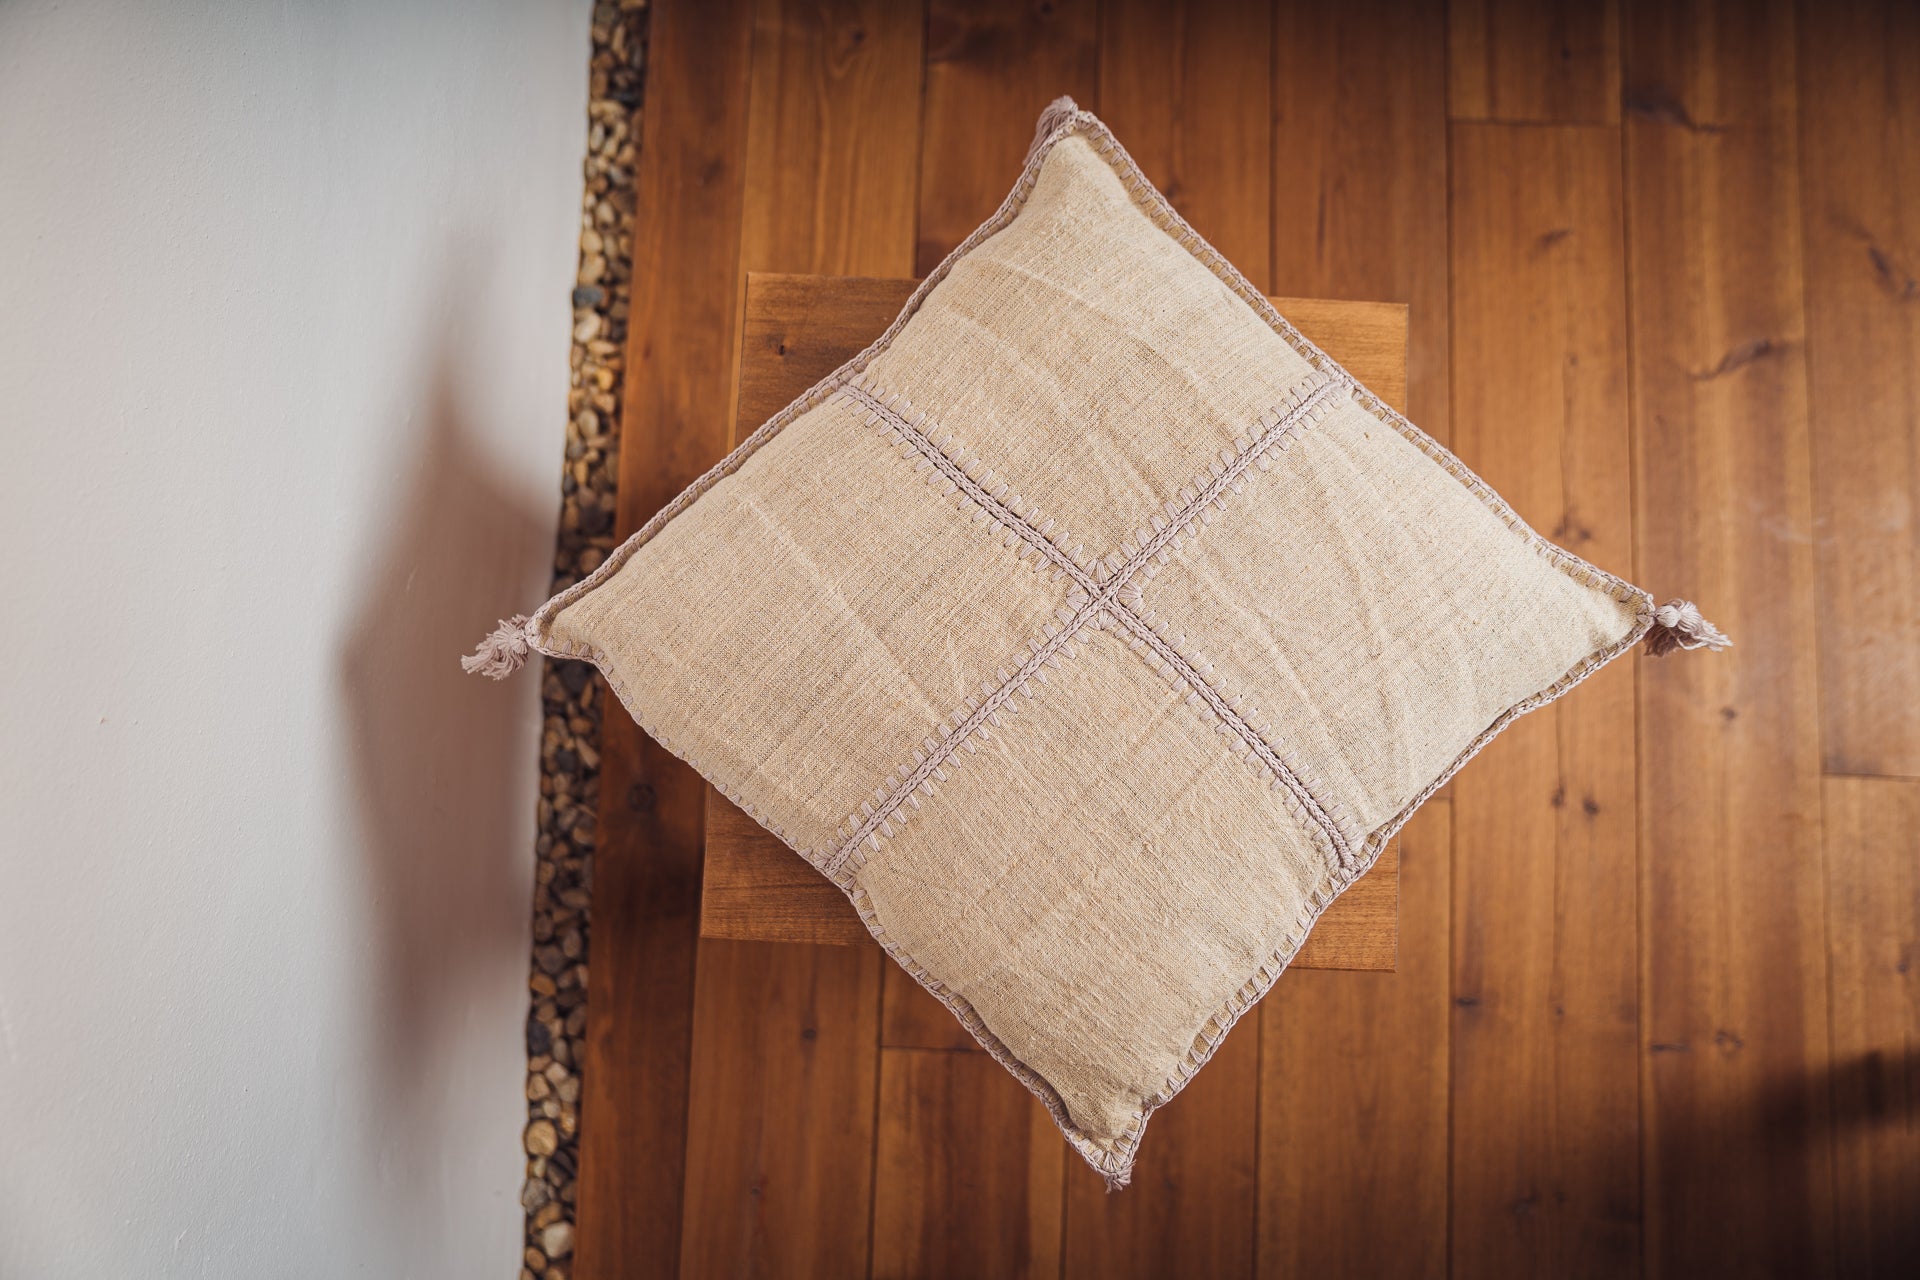 Pillow: Antique Hungarian handwoven hemp, hand stitched - P456